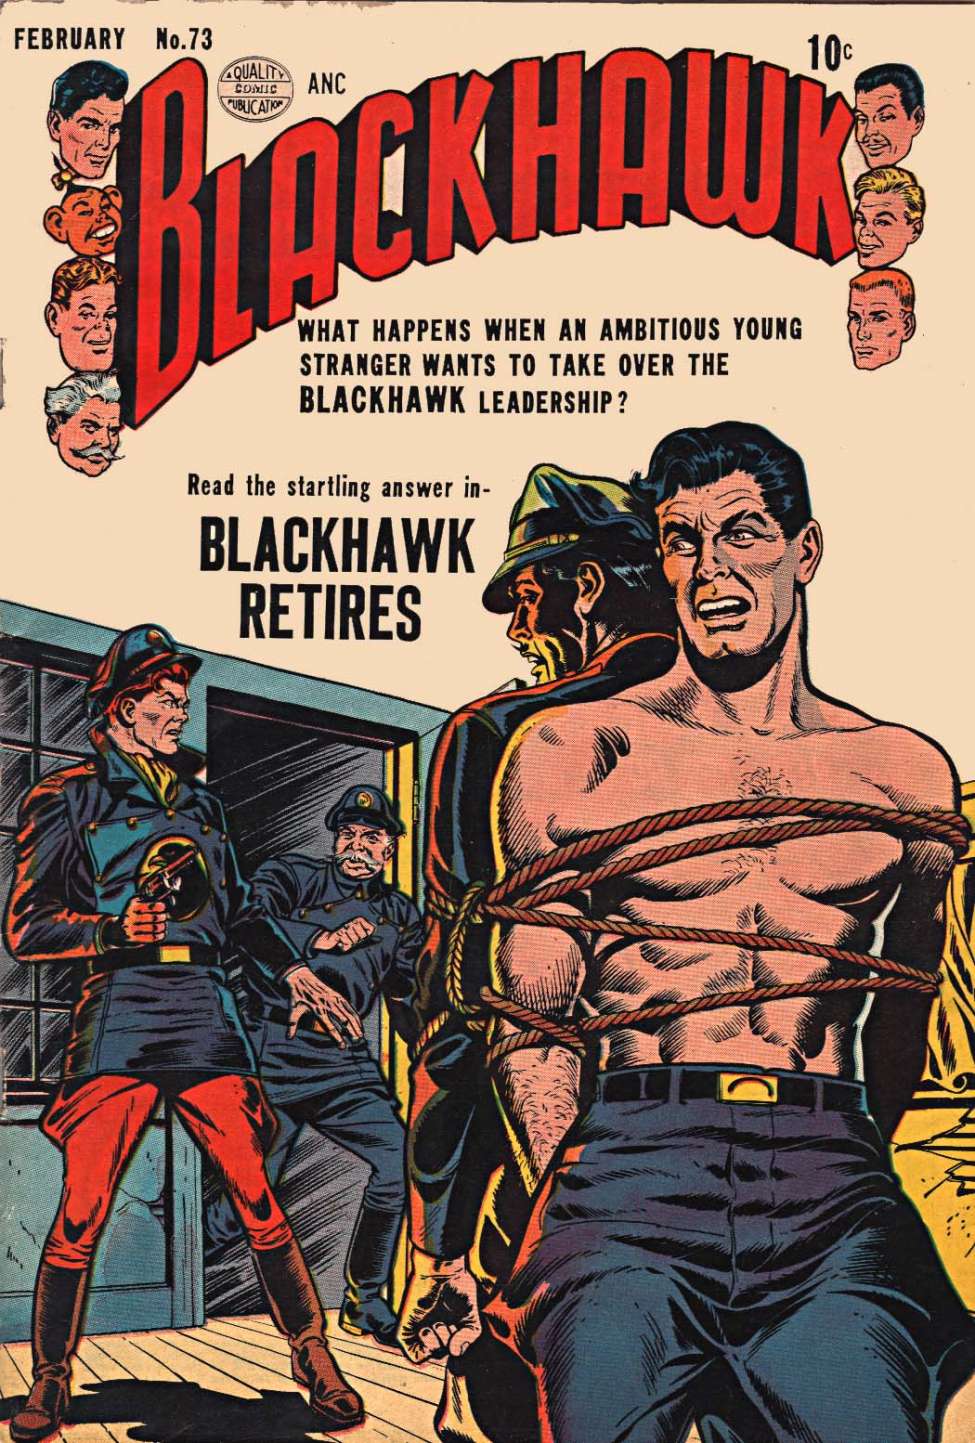 Book Cover For Blackhawk 73 - Version 1